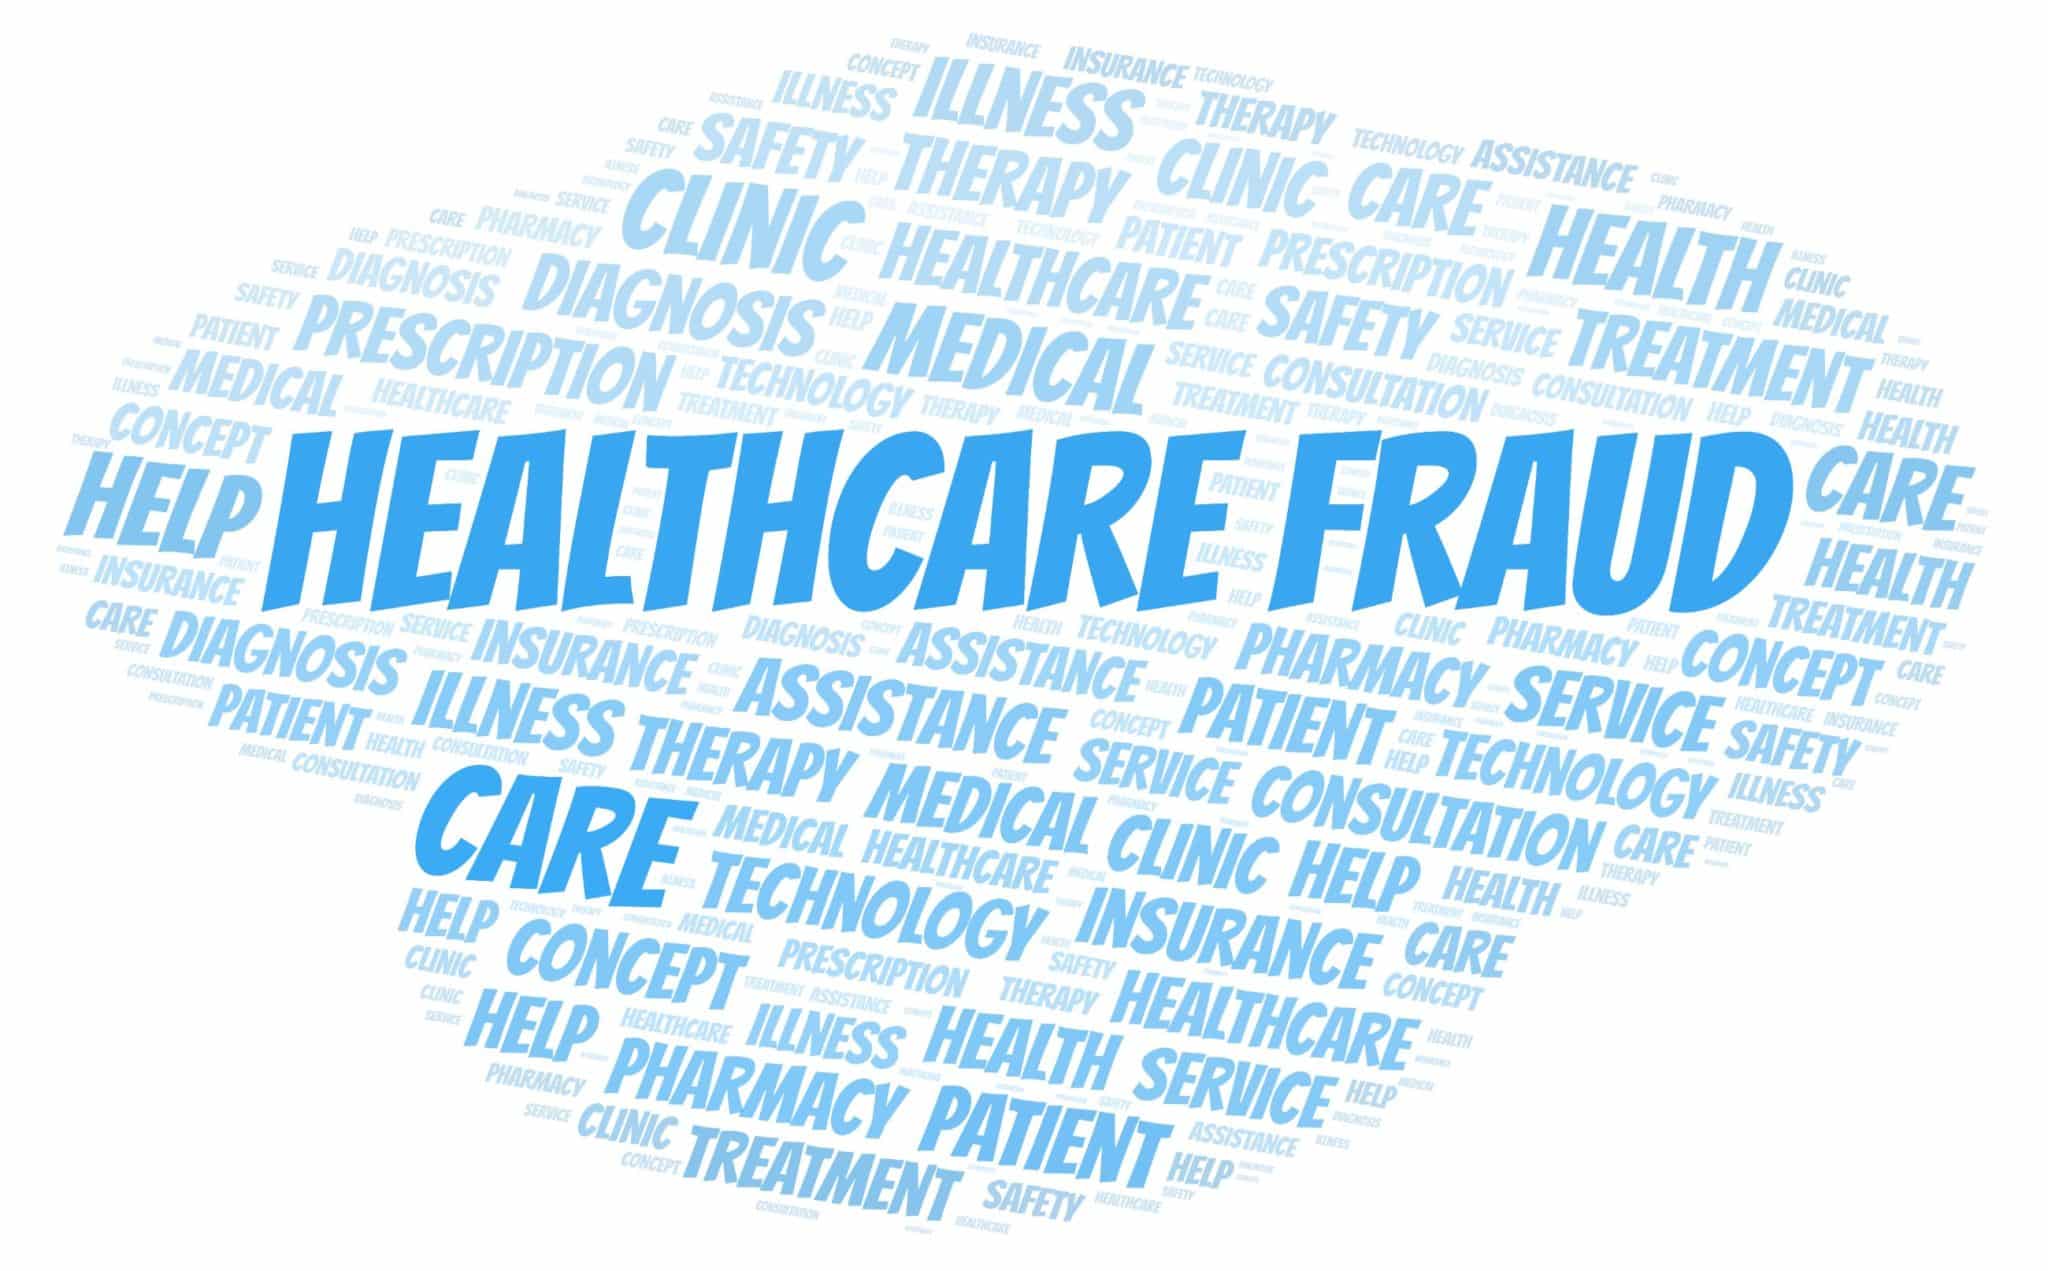 Federal Healthcare Fraud: Texas Doctors Pay $28 Million